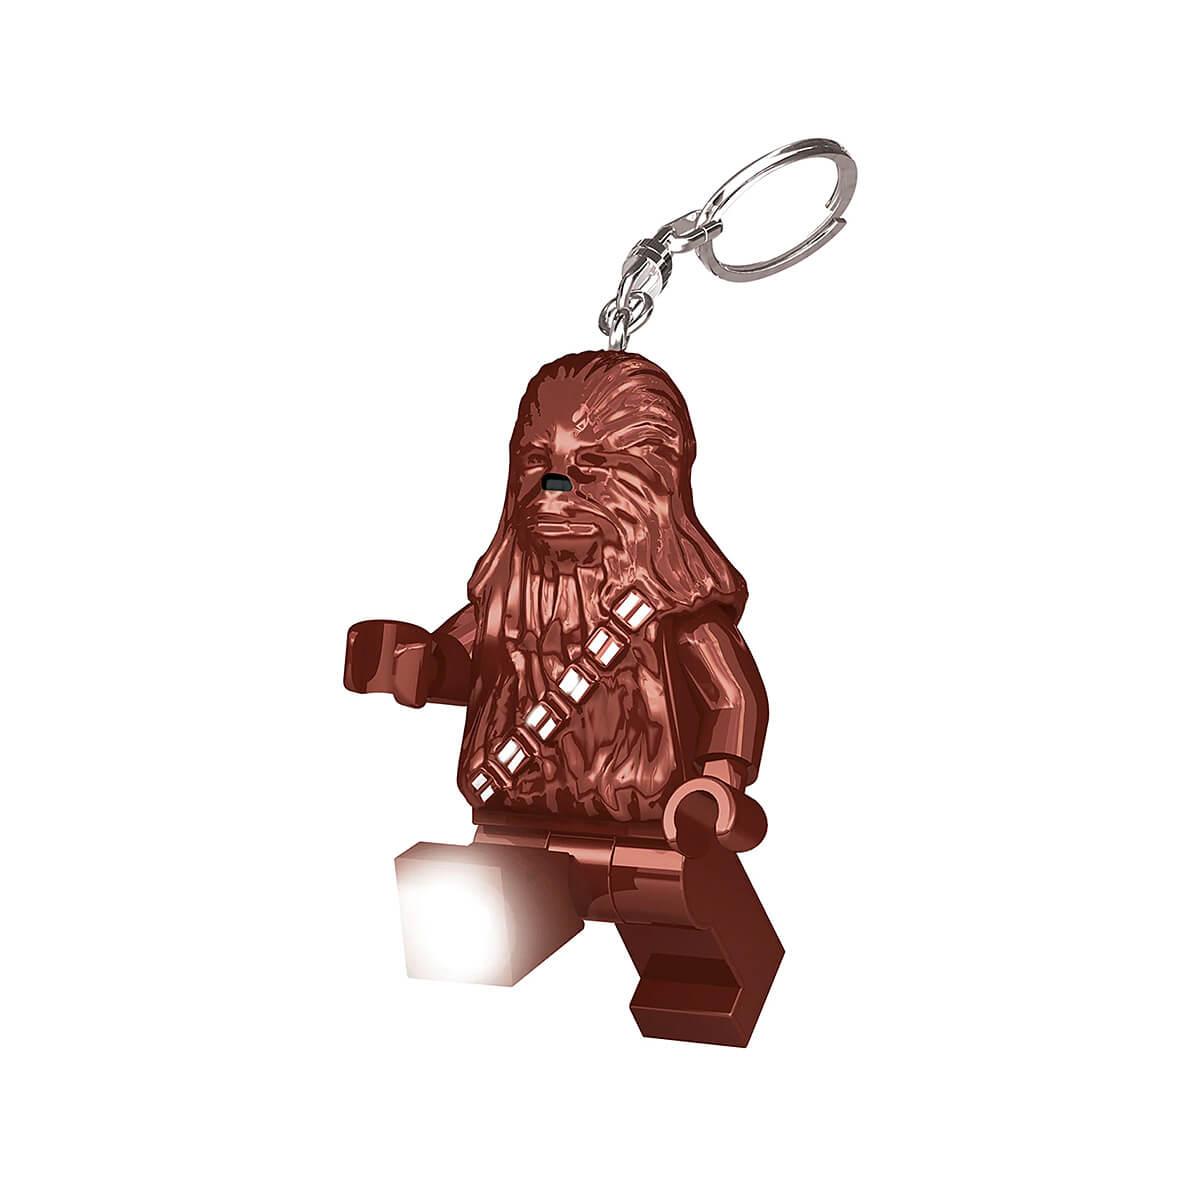 LEGO Star Wars Chewbacca Key Chain 